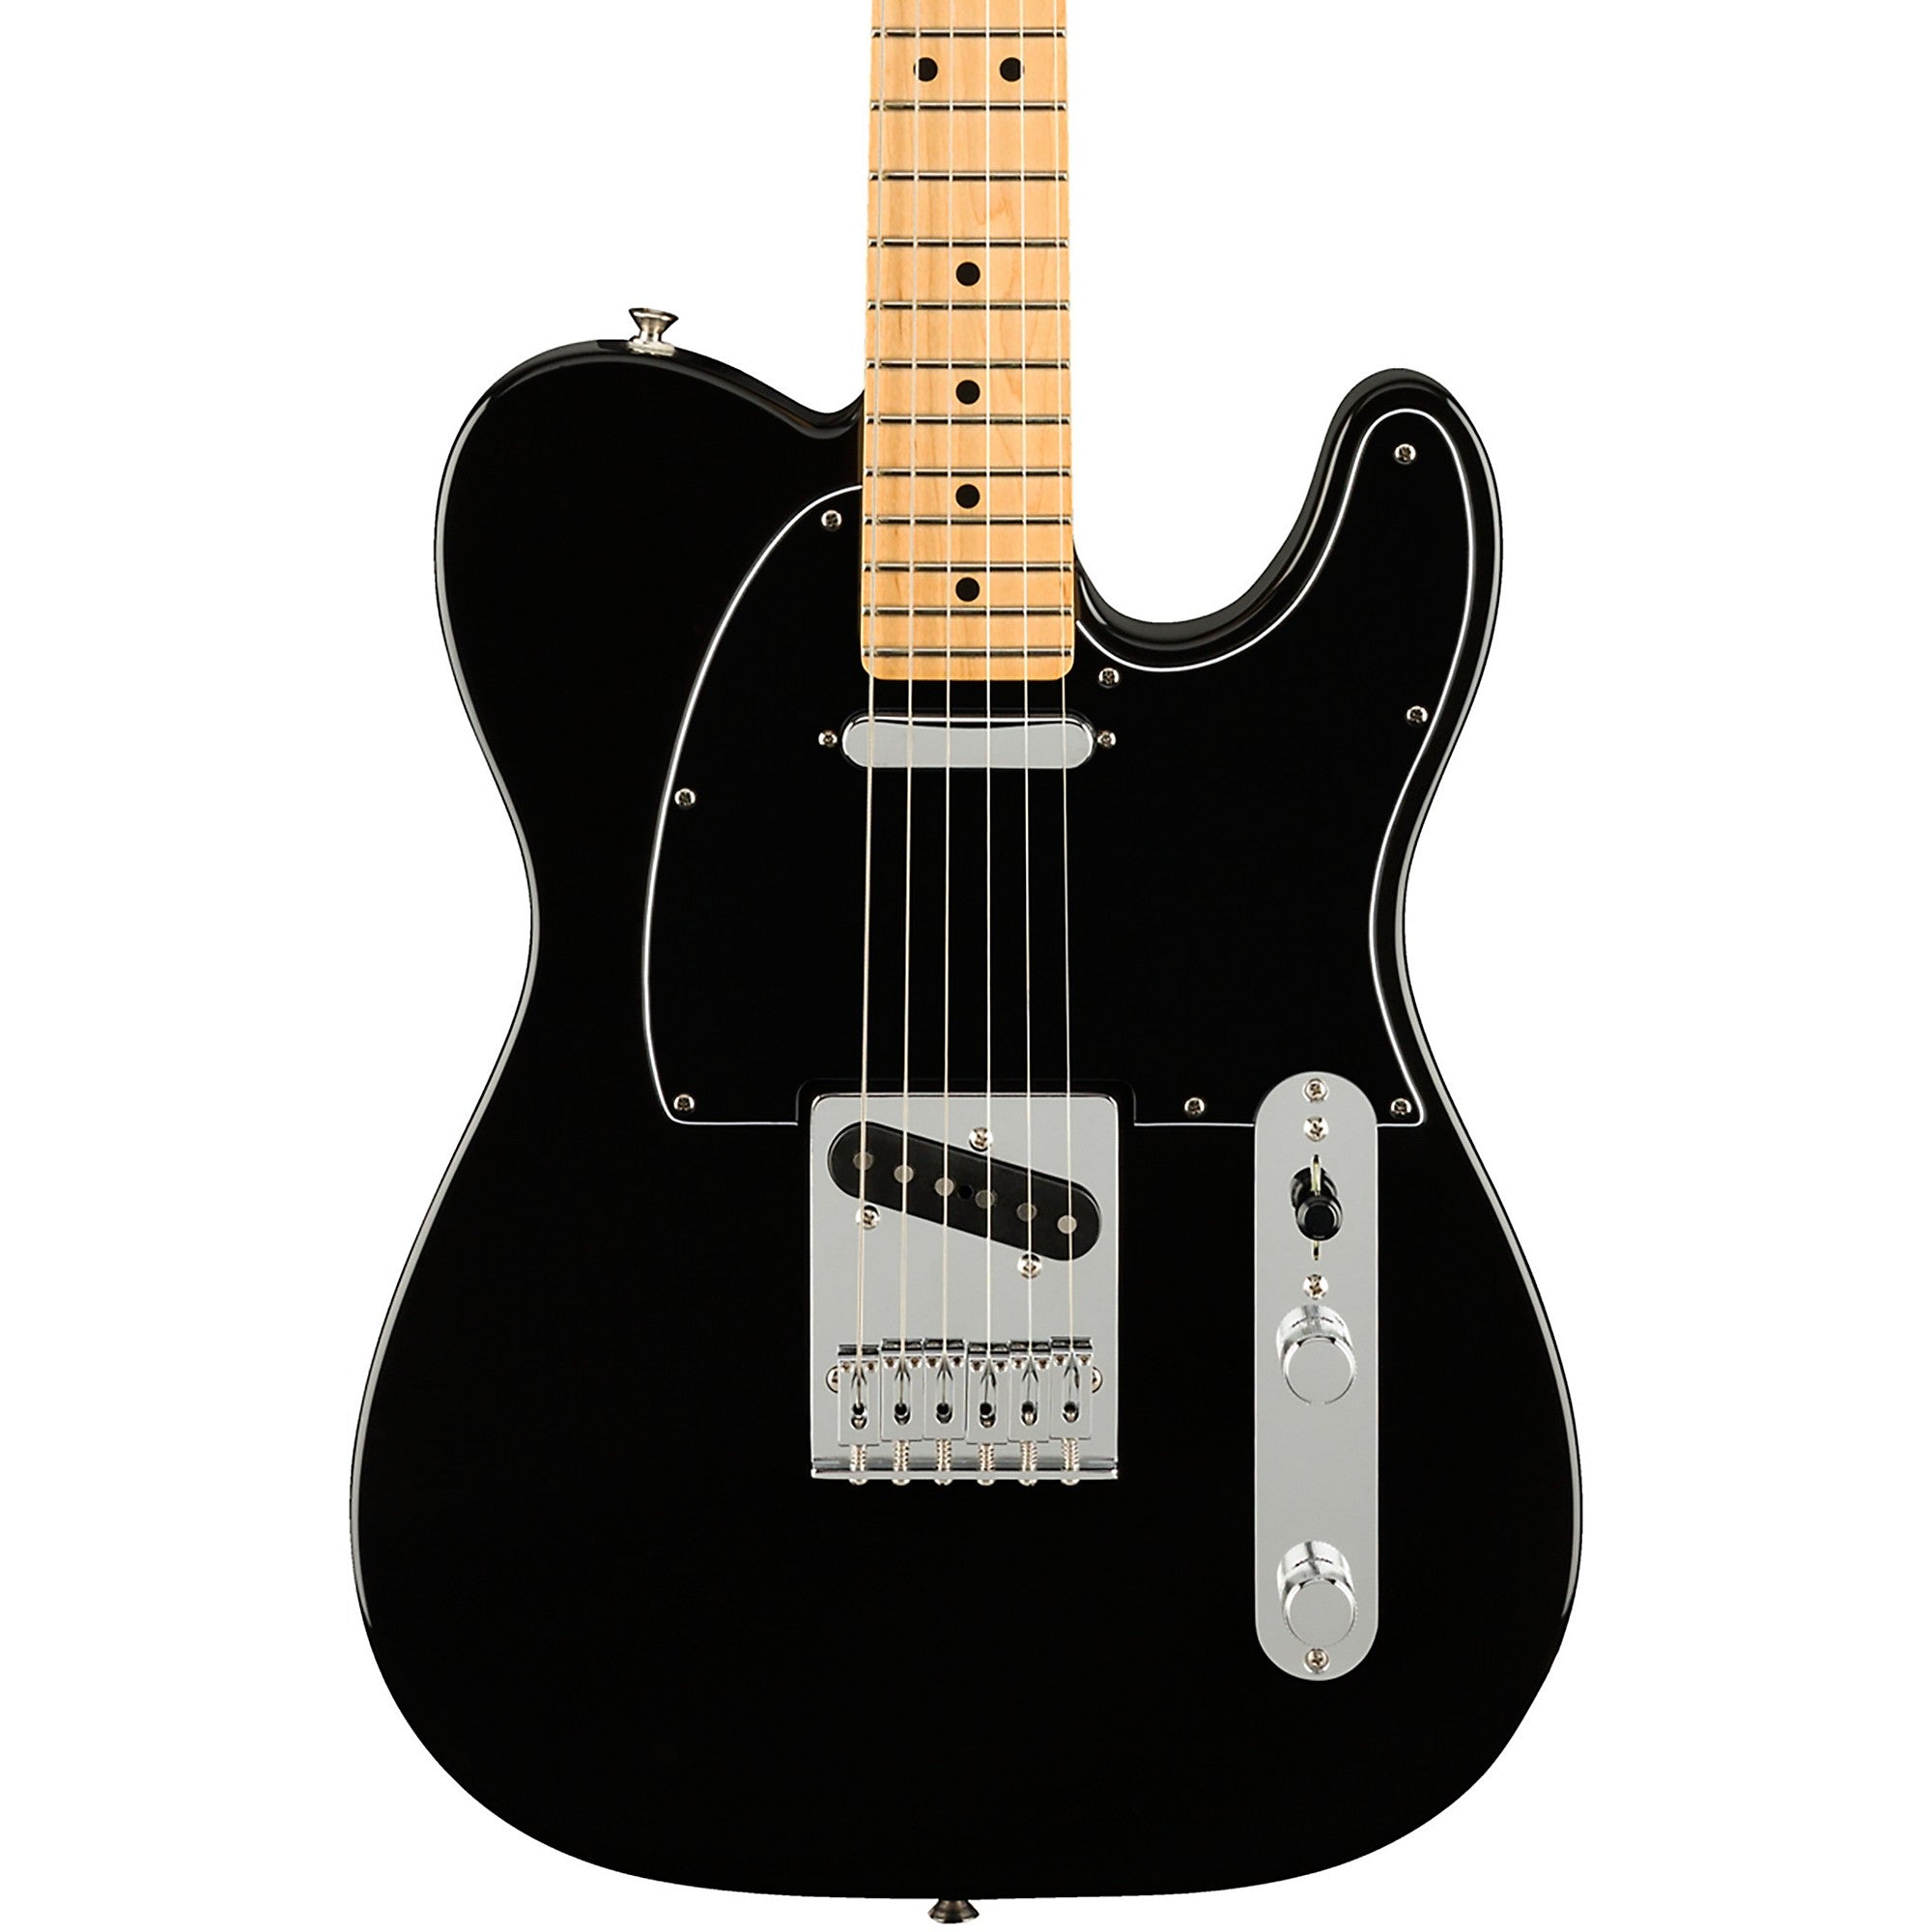 Fender Player Telecaster Electric Guitar, Maple FB, Black